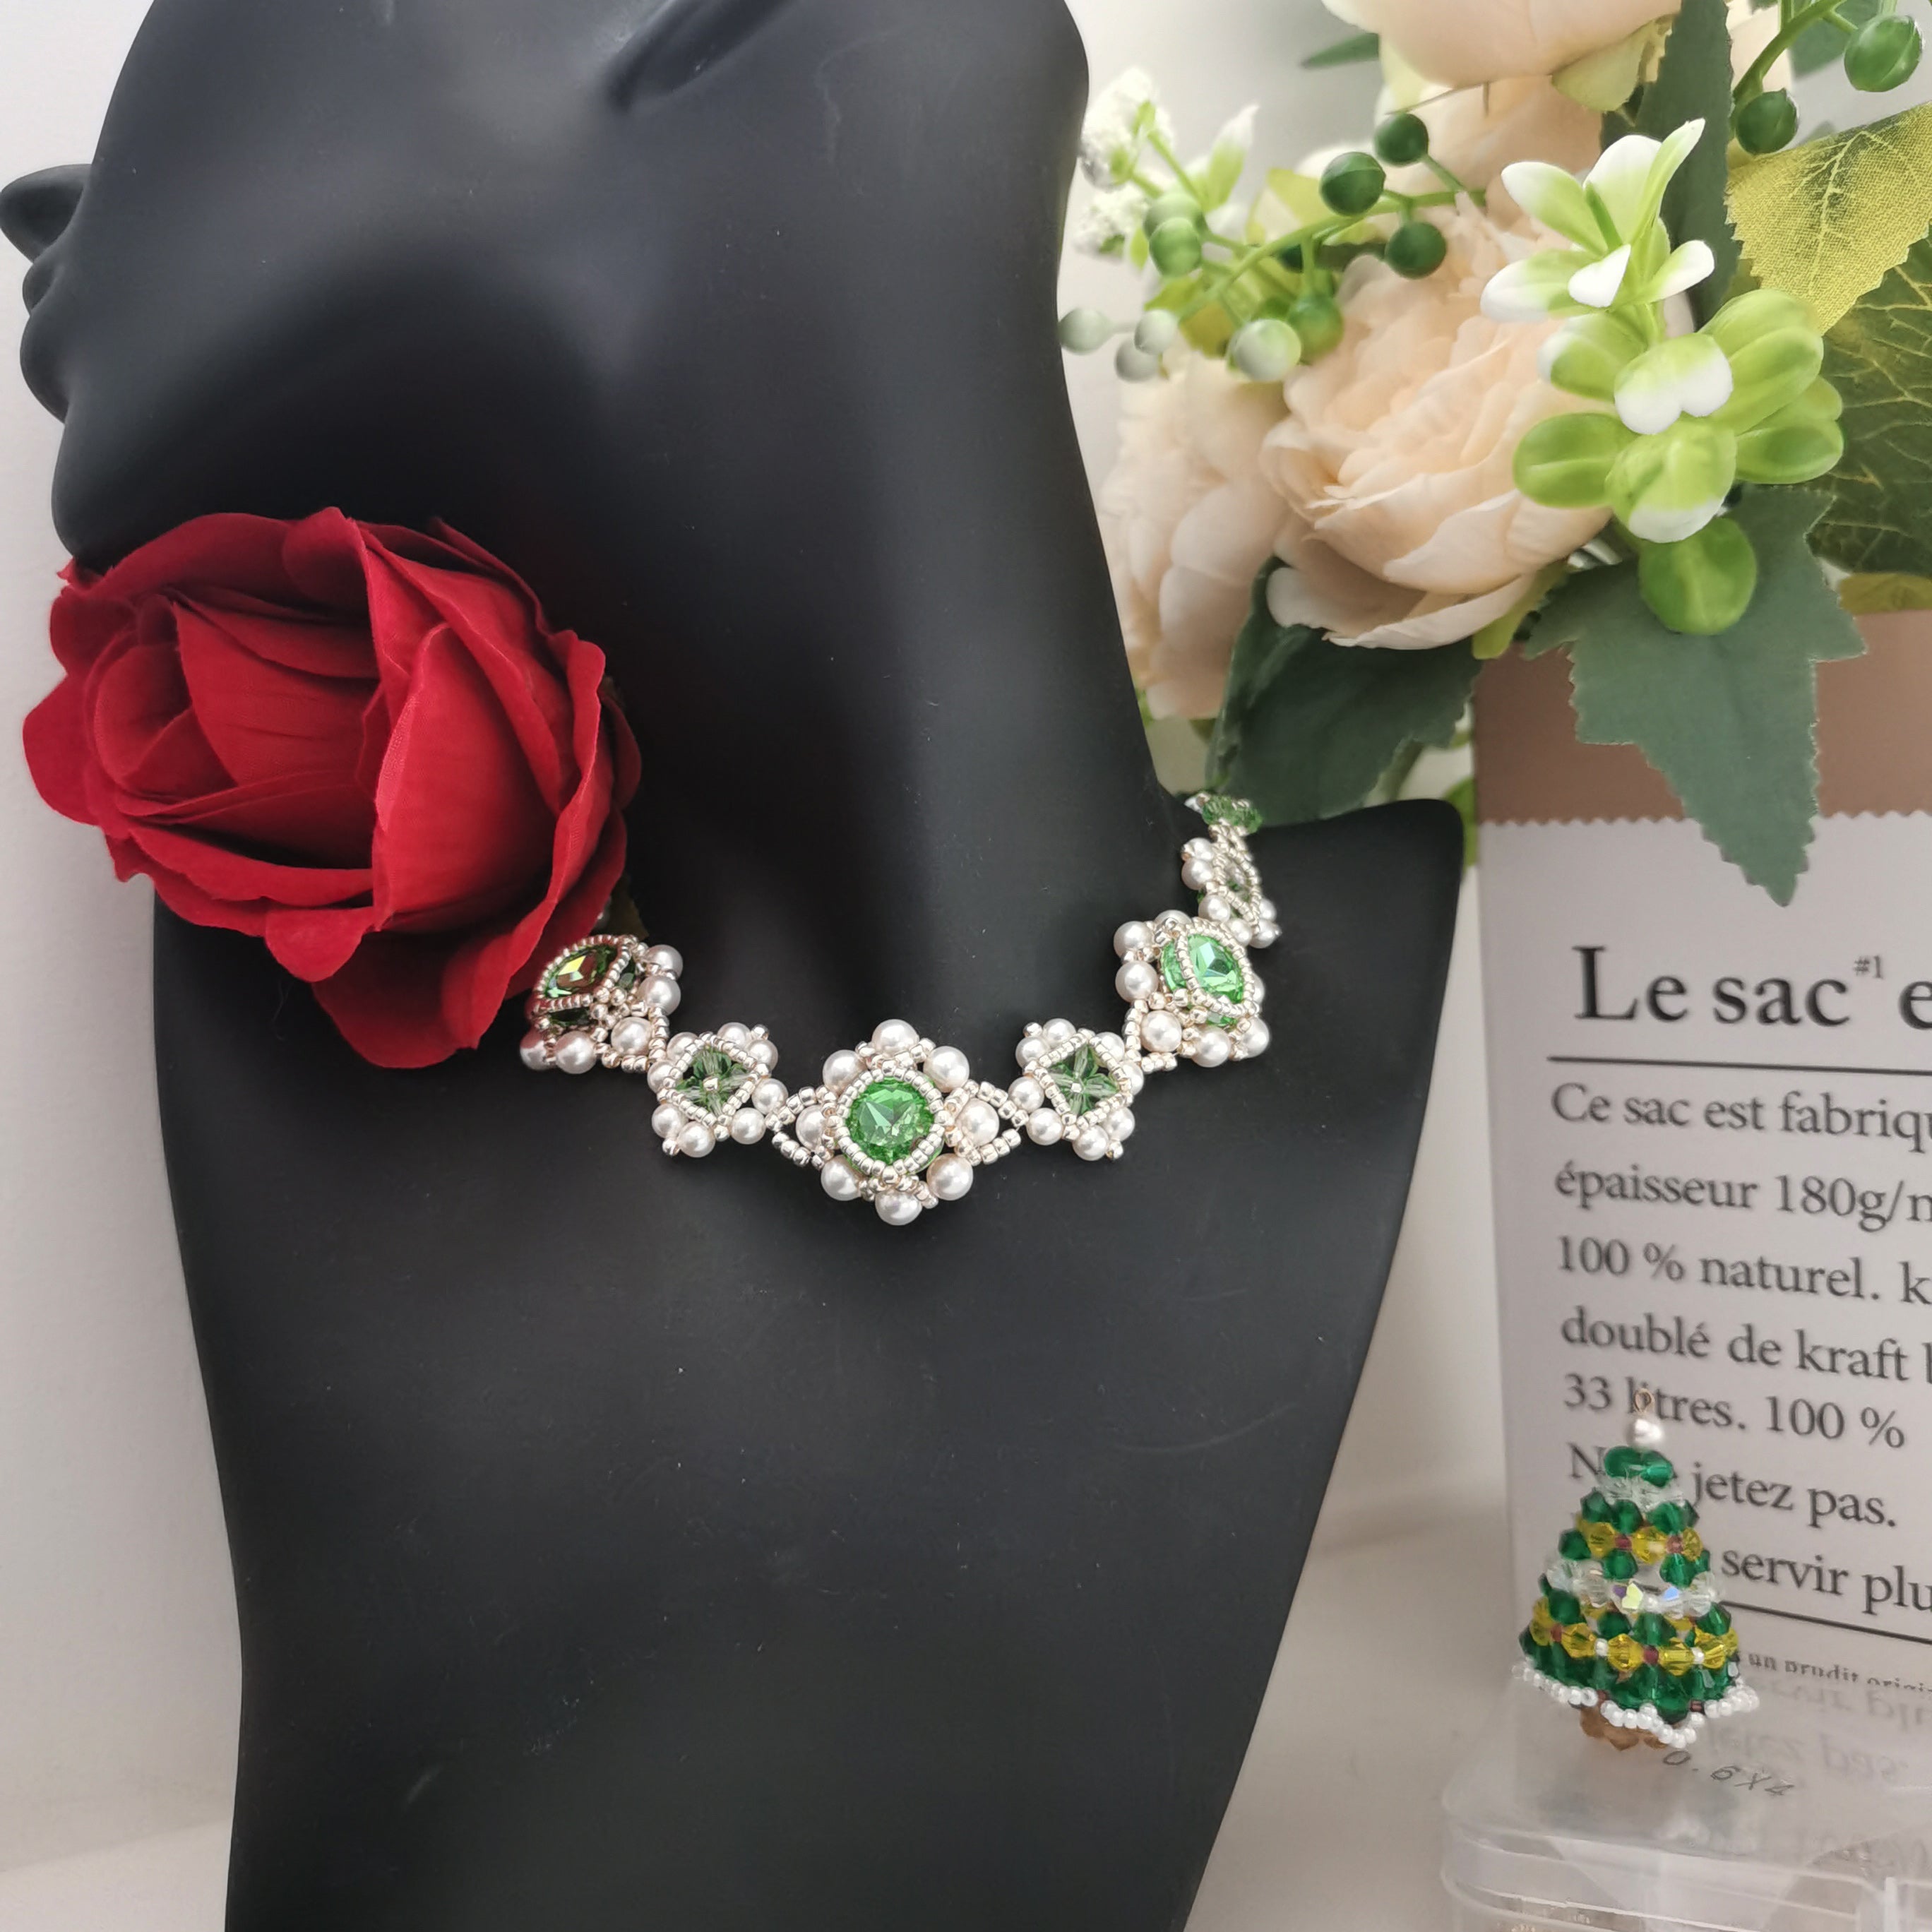 Kit - Green Gem Stone Beaded Necklace